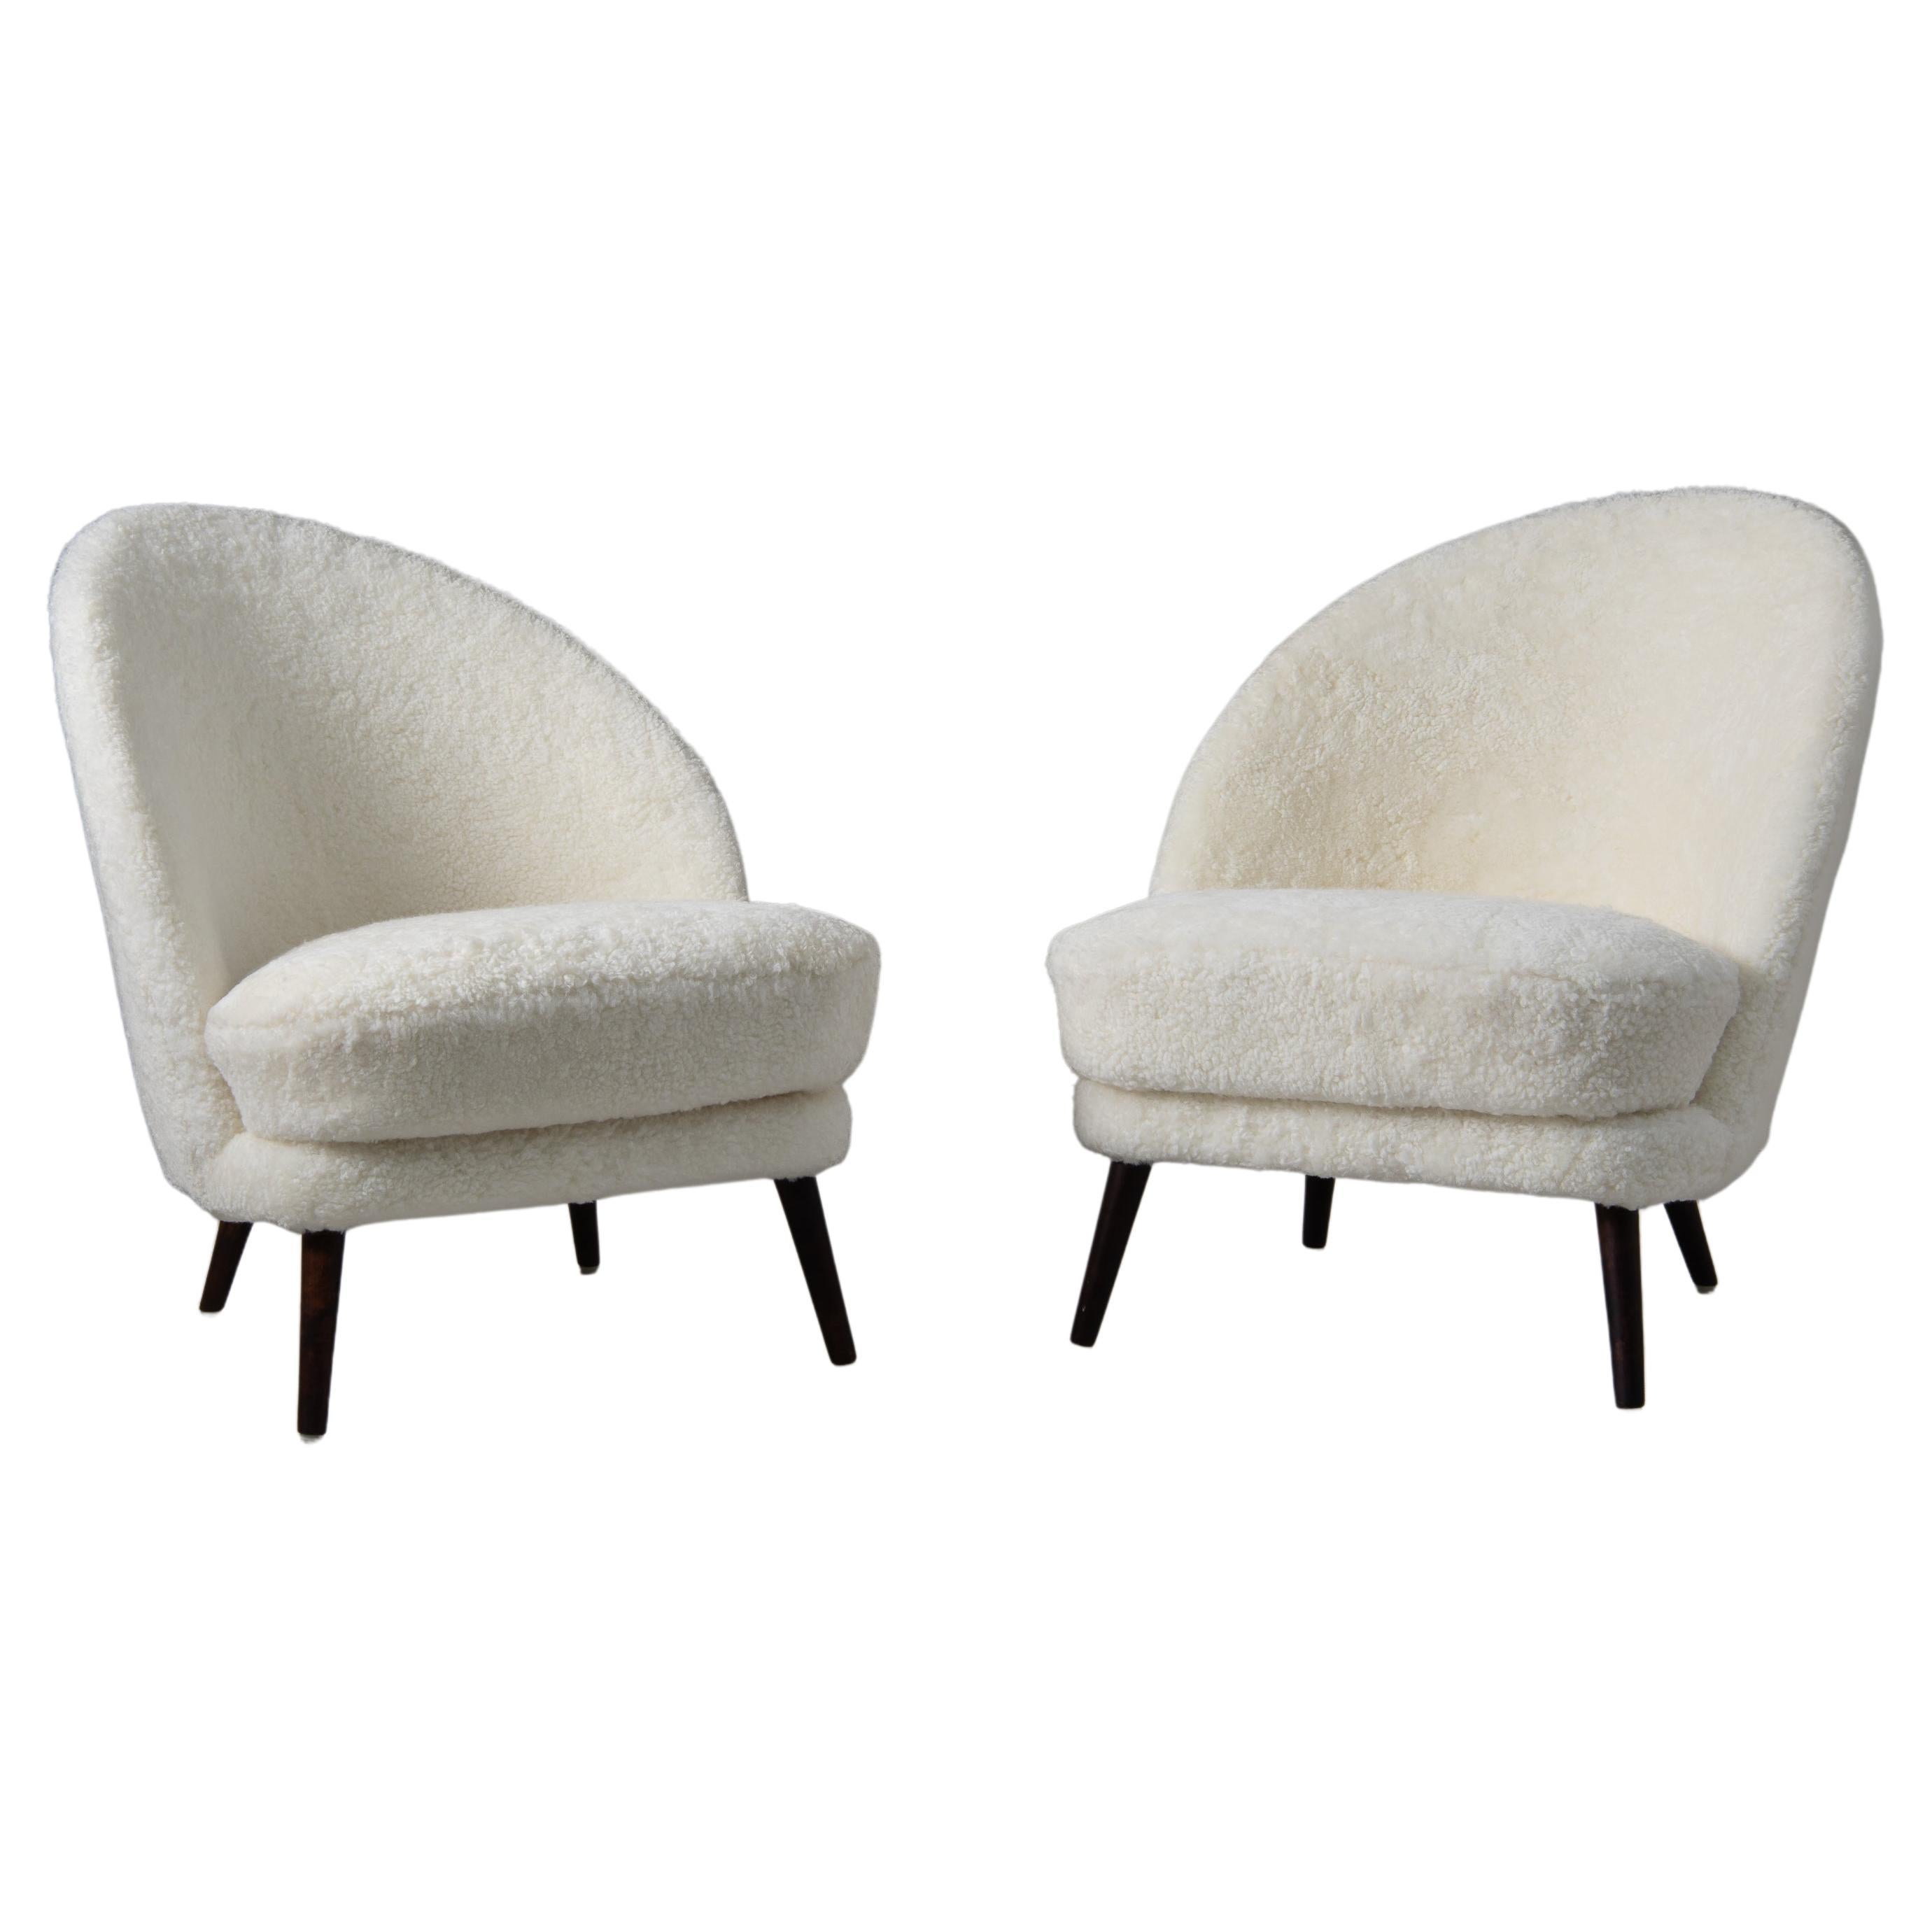 Mid 20th Century Scandinavian Modern White Sheepskin Lounge Chairs